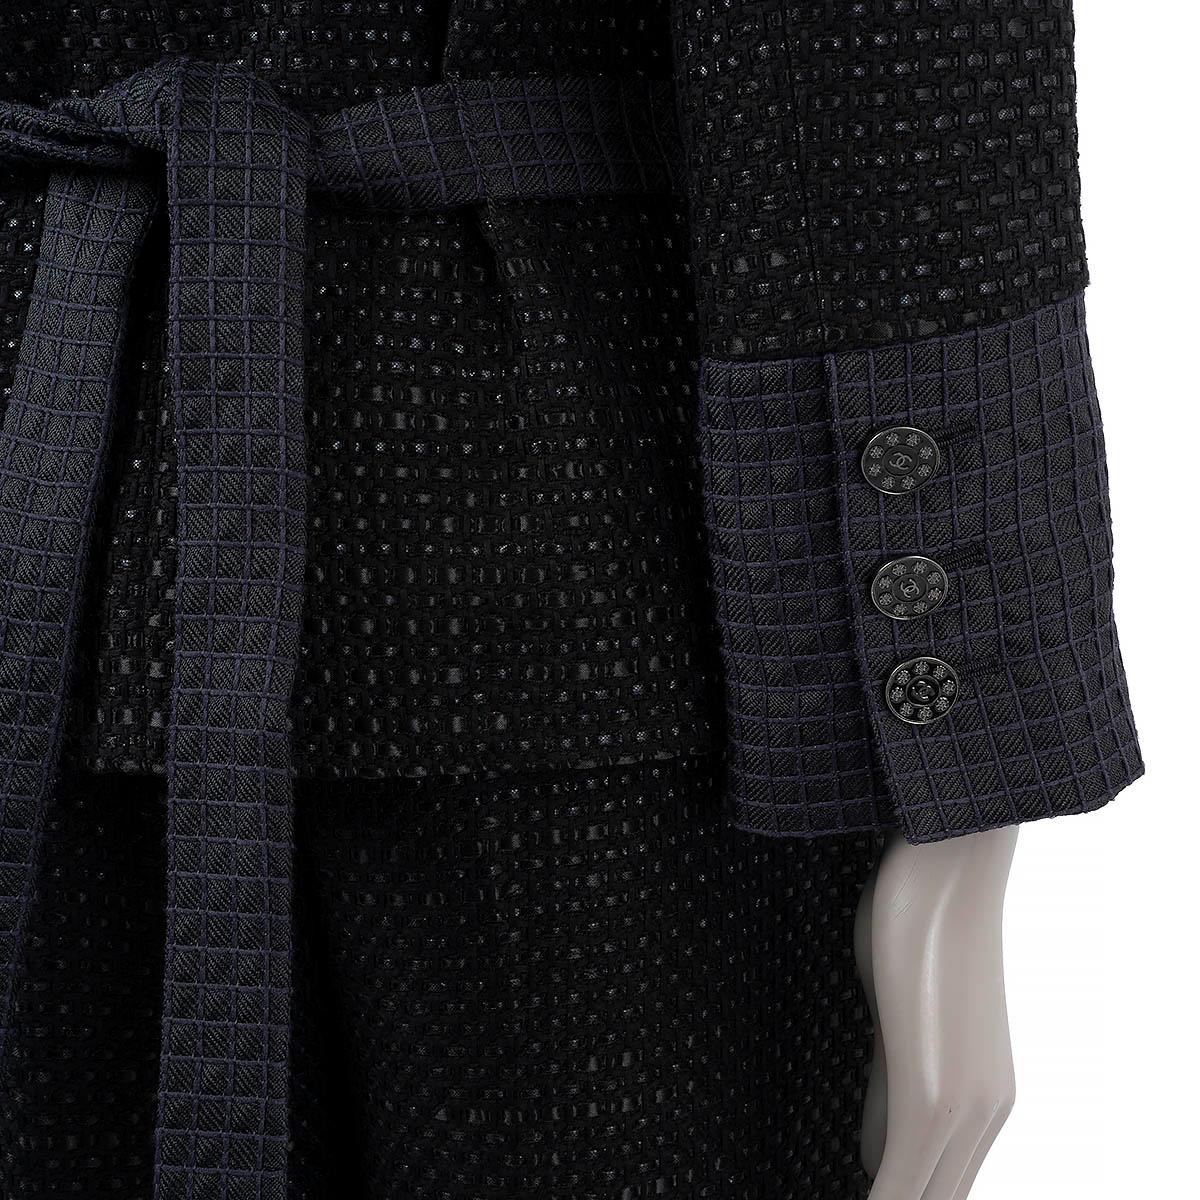 CHANEL black cotton 2016 16C SEOUL DOUBLE BREASTED PANT Suit 38 S 4